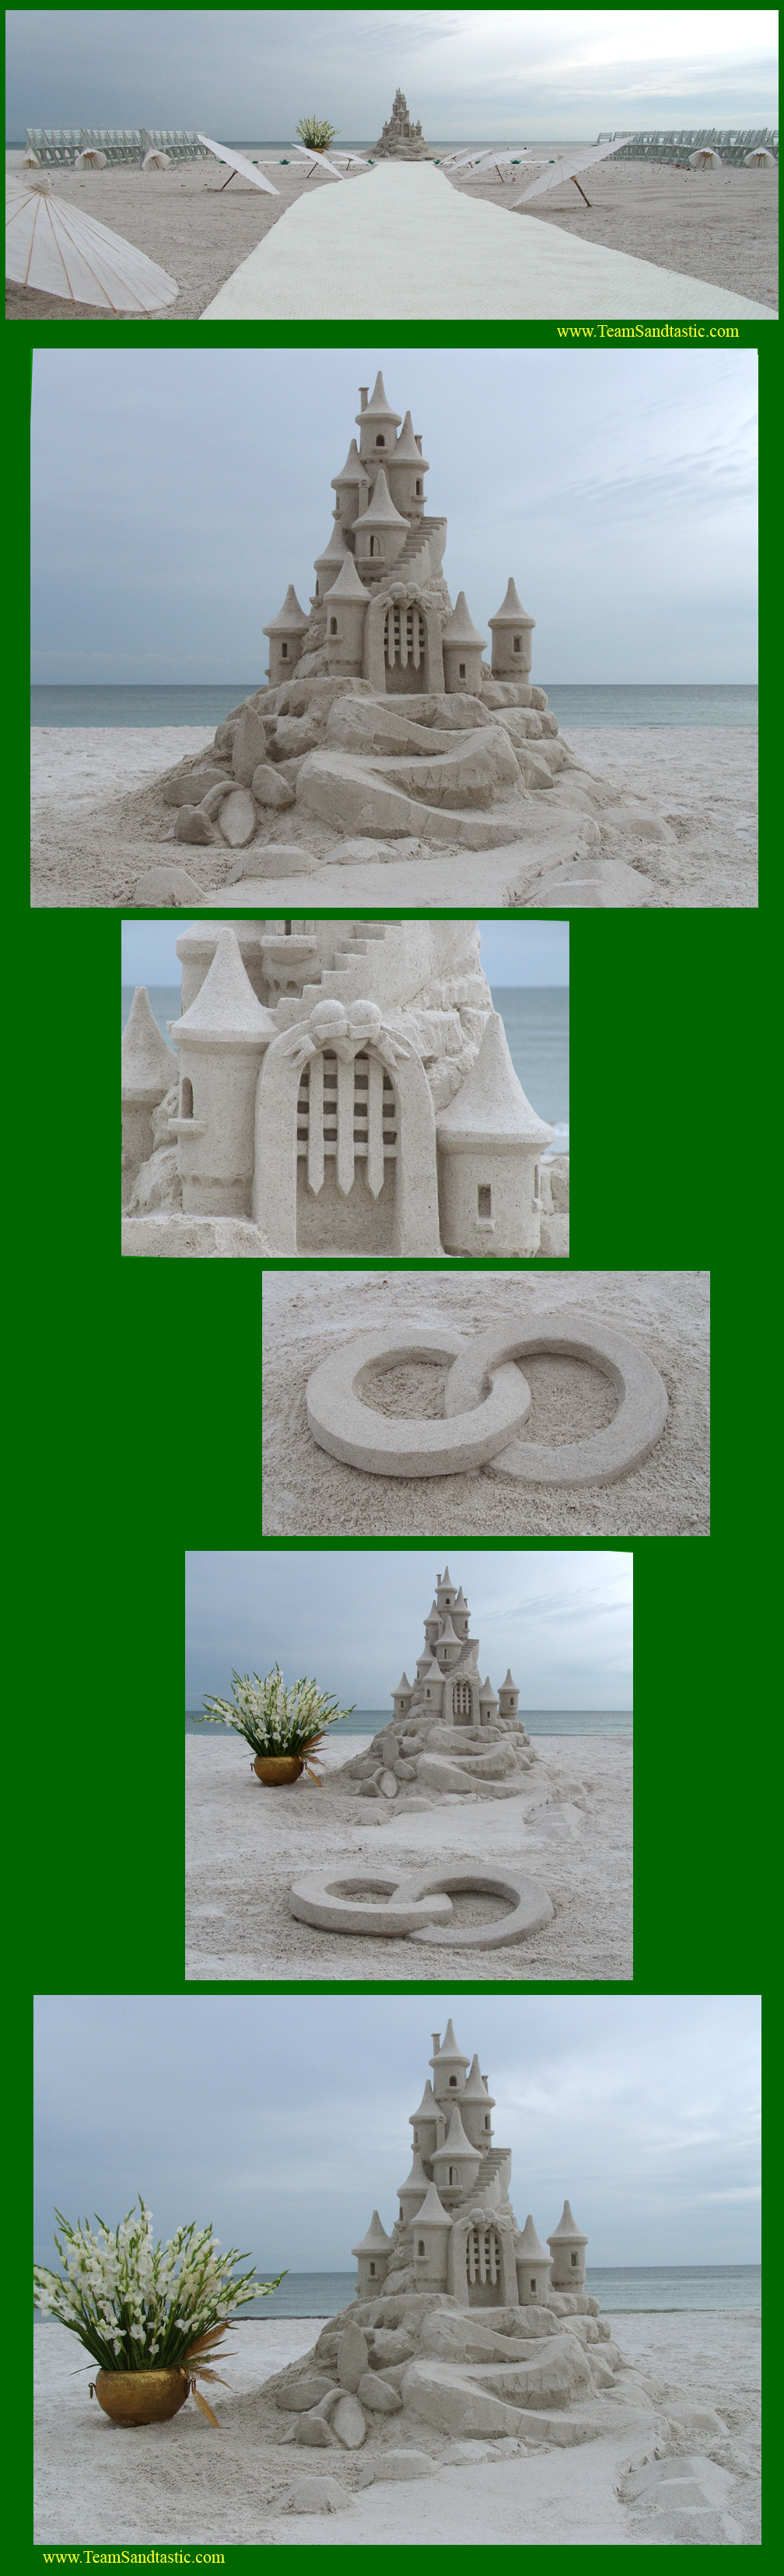 Wedding Sand Sculptures